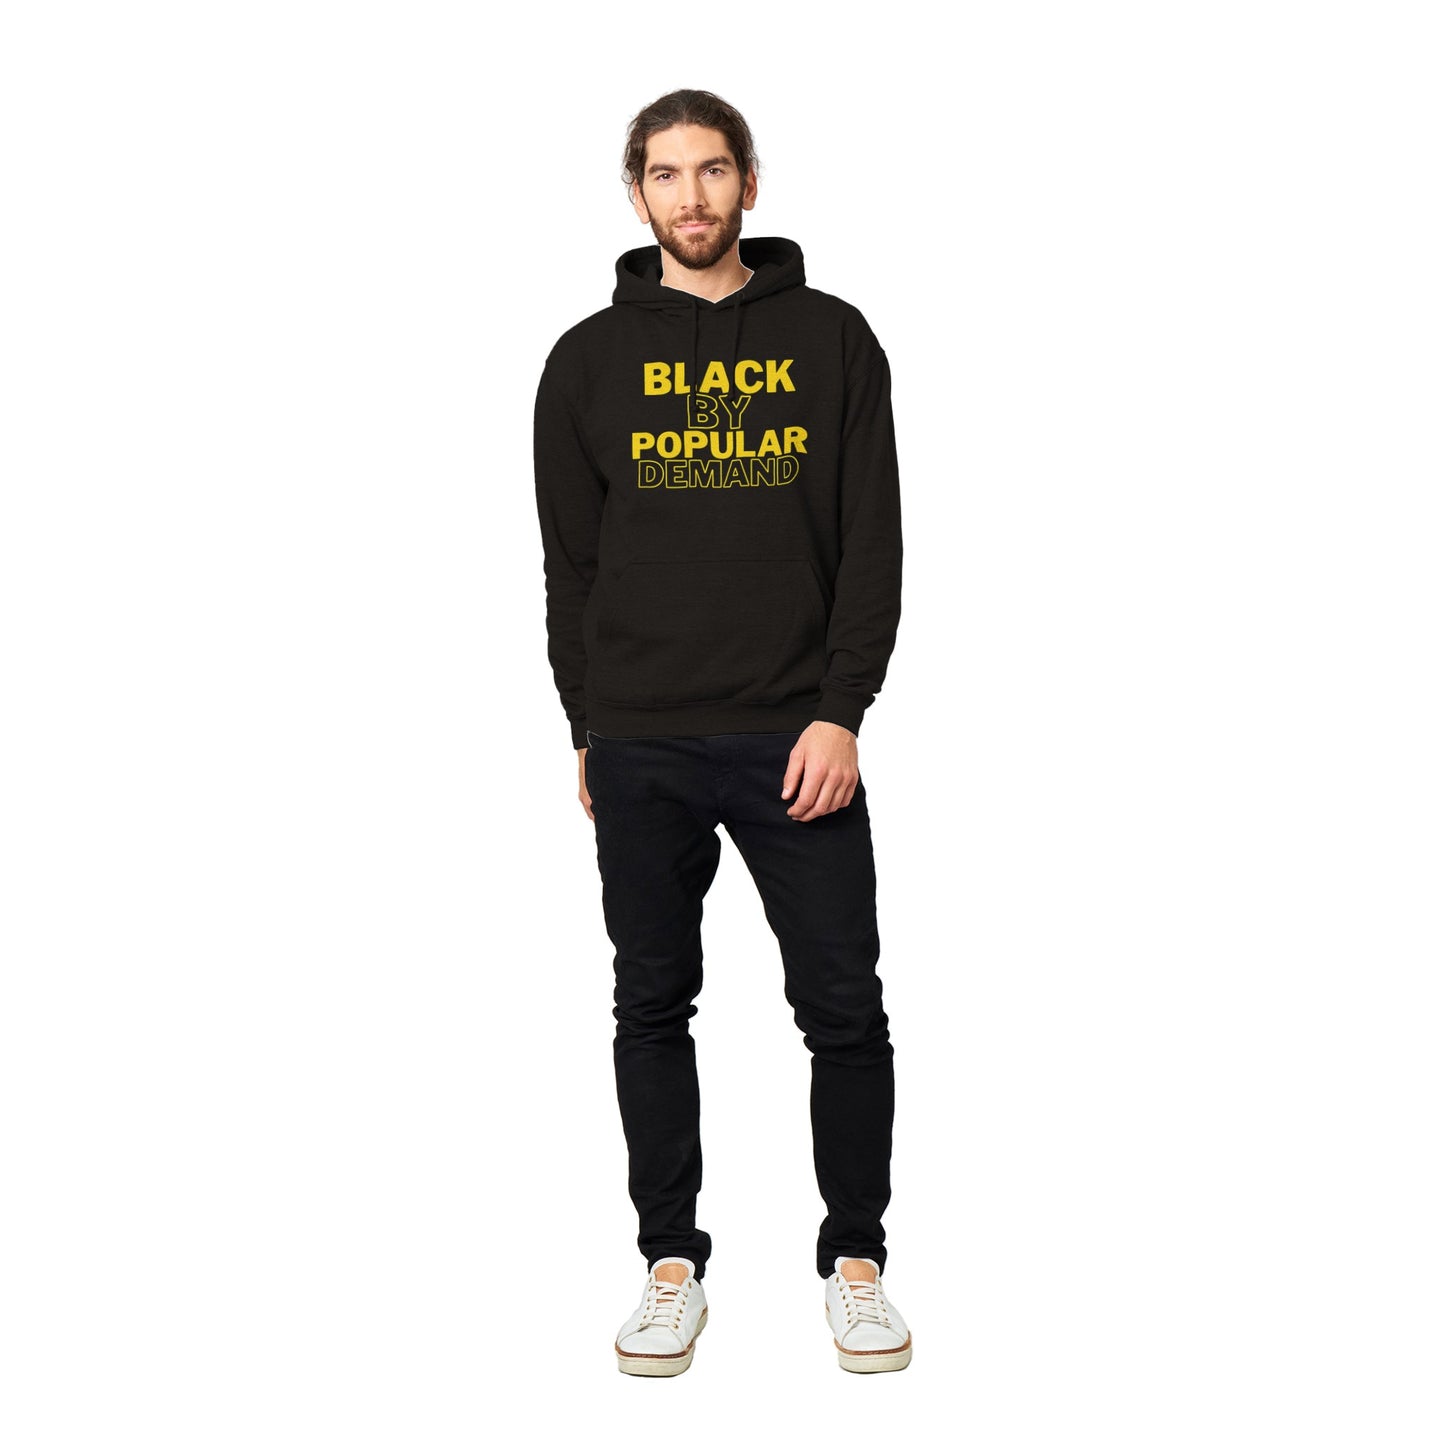 Black By Popular Demand - Premium Unisex Pullover Hoodie